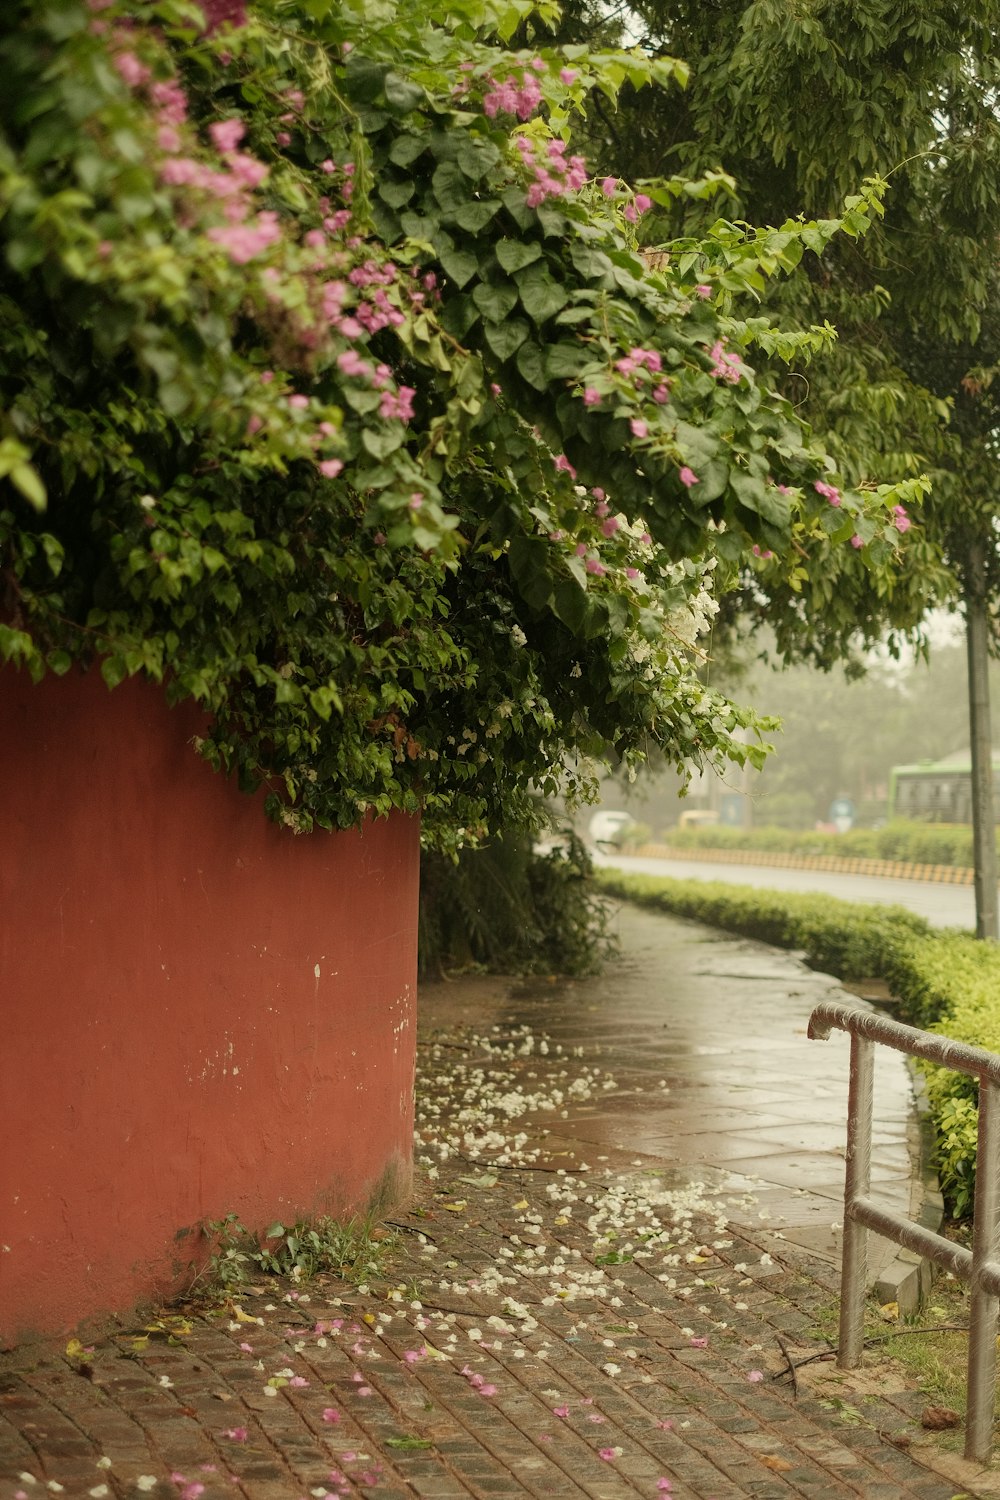 Una donna seduta su una panchina sotto la pioggia